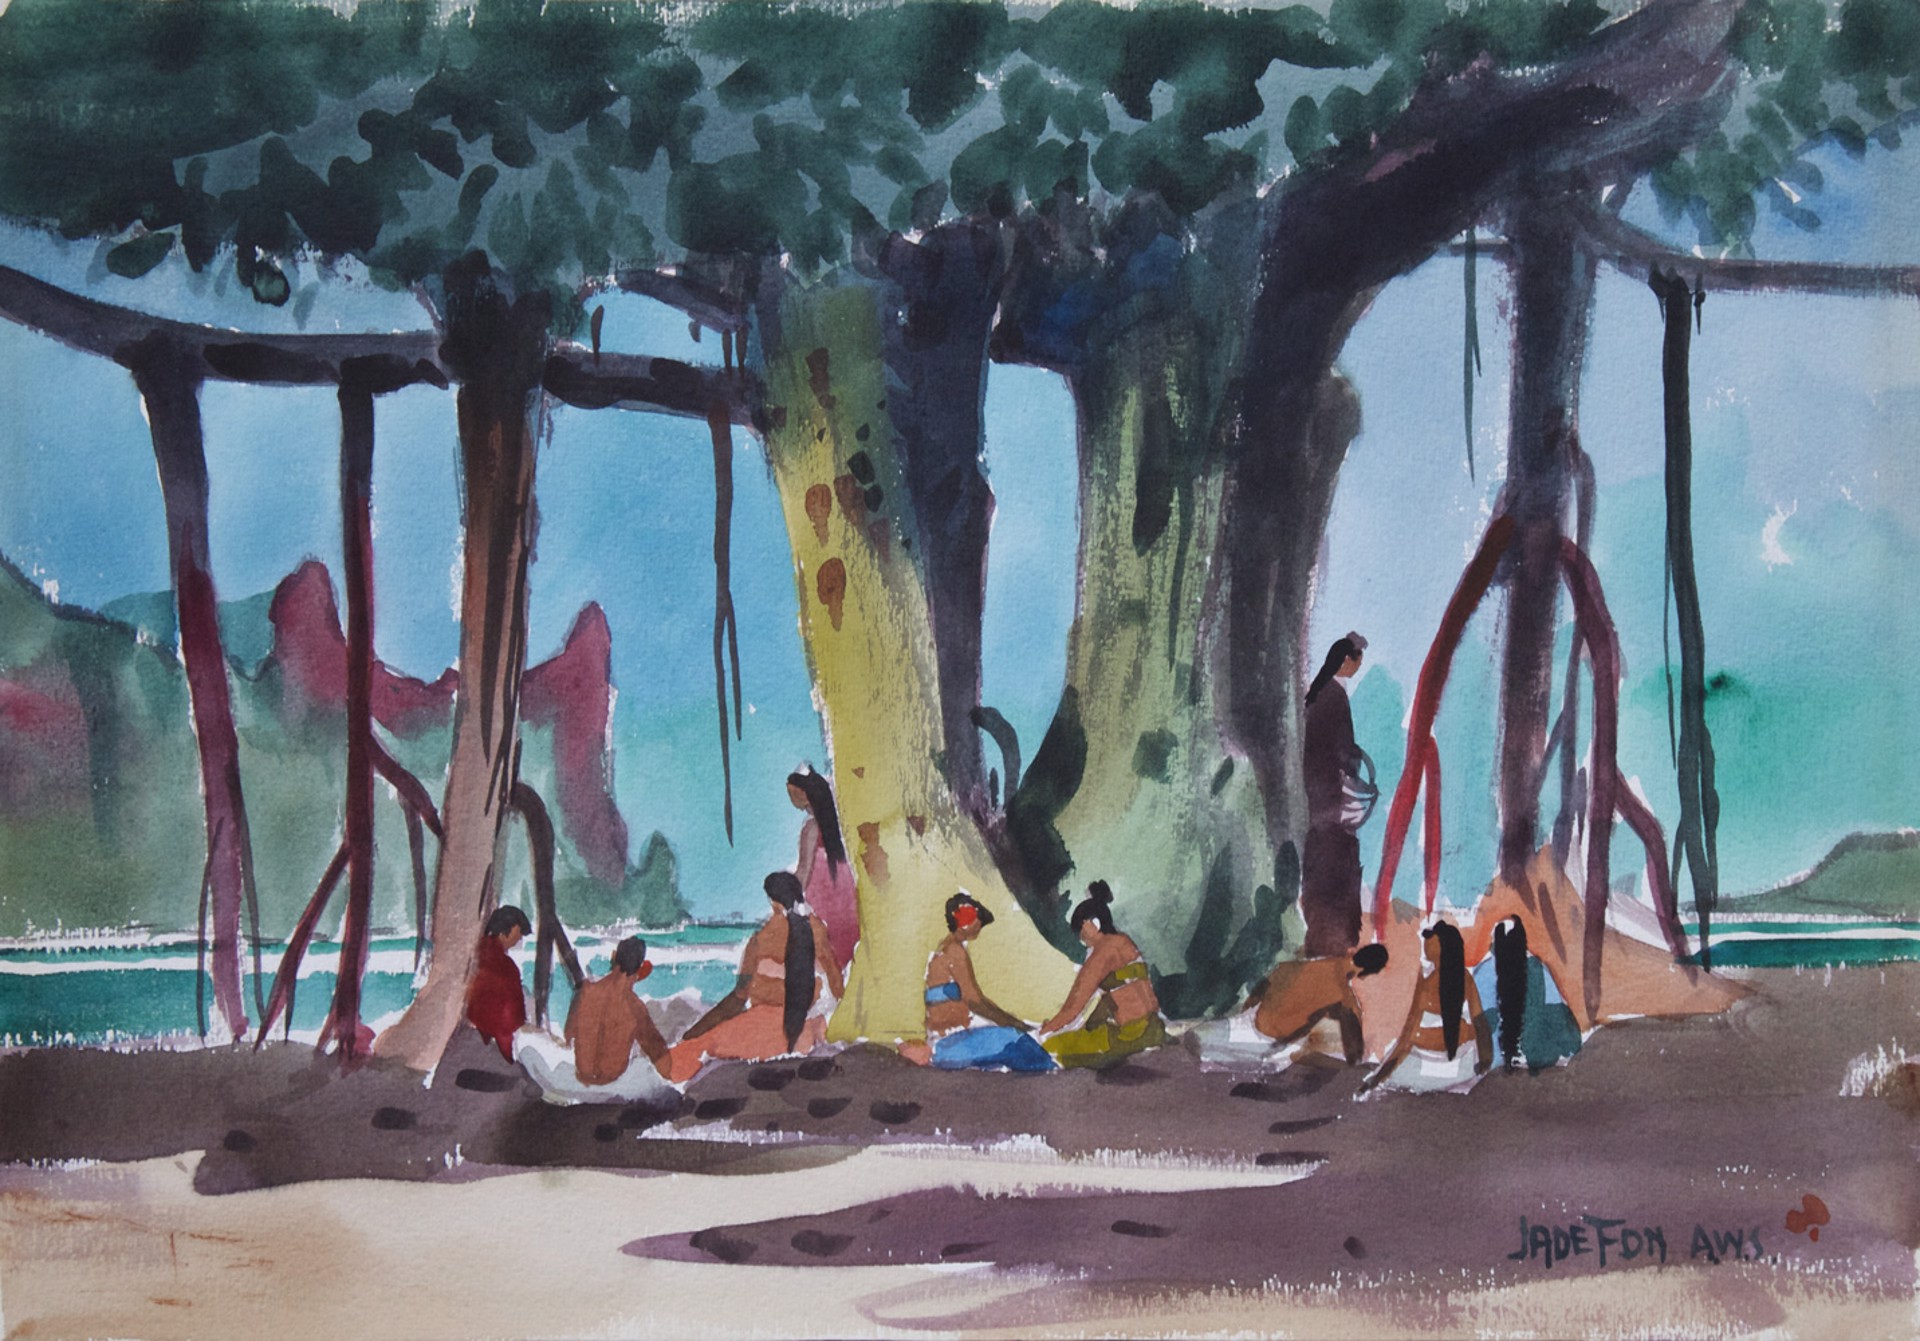 Under the Banyan Tree by Jade Fon